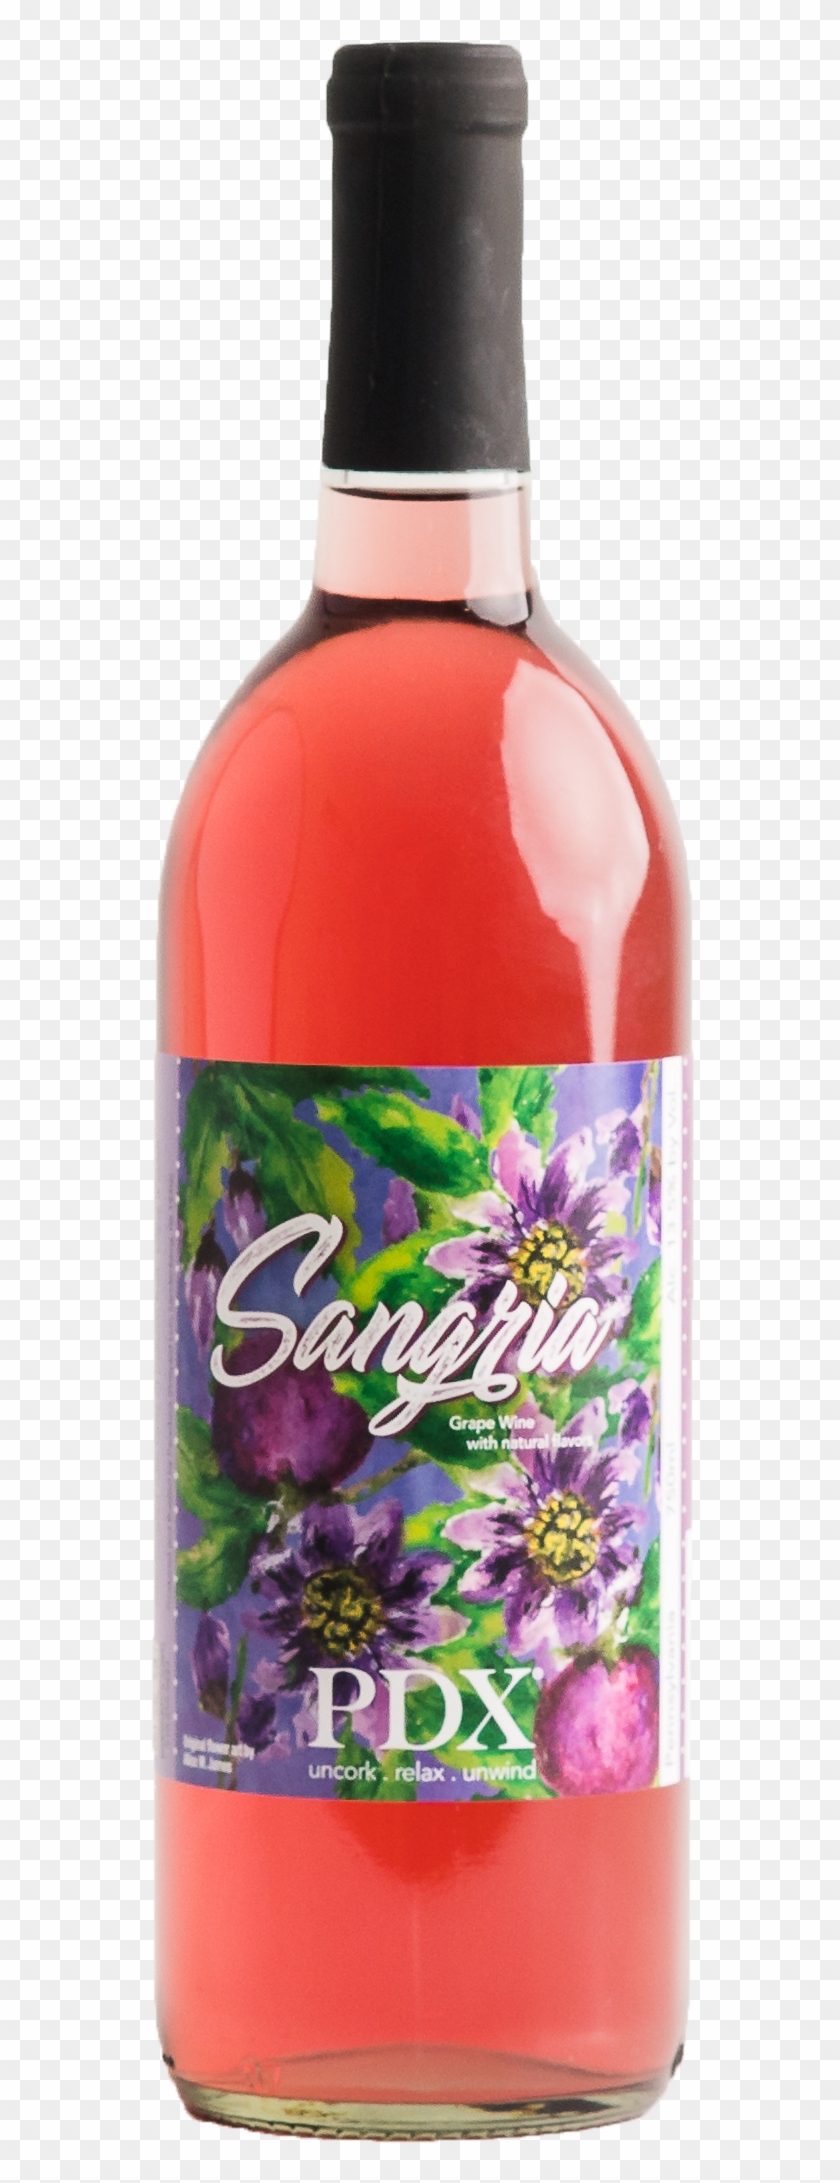 Sangria Bottle - Wine Bottle Clipart #1975463